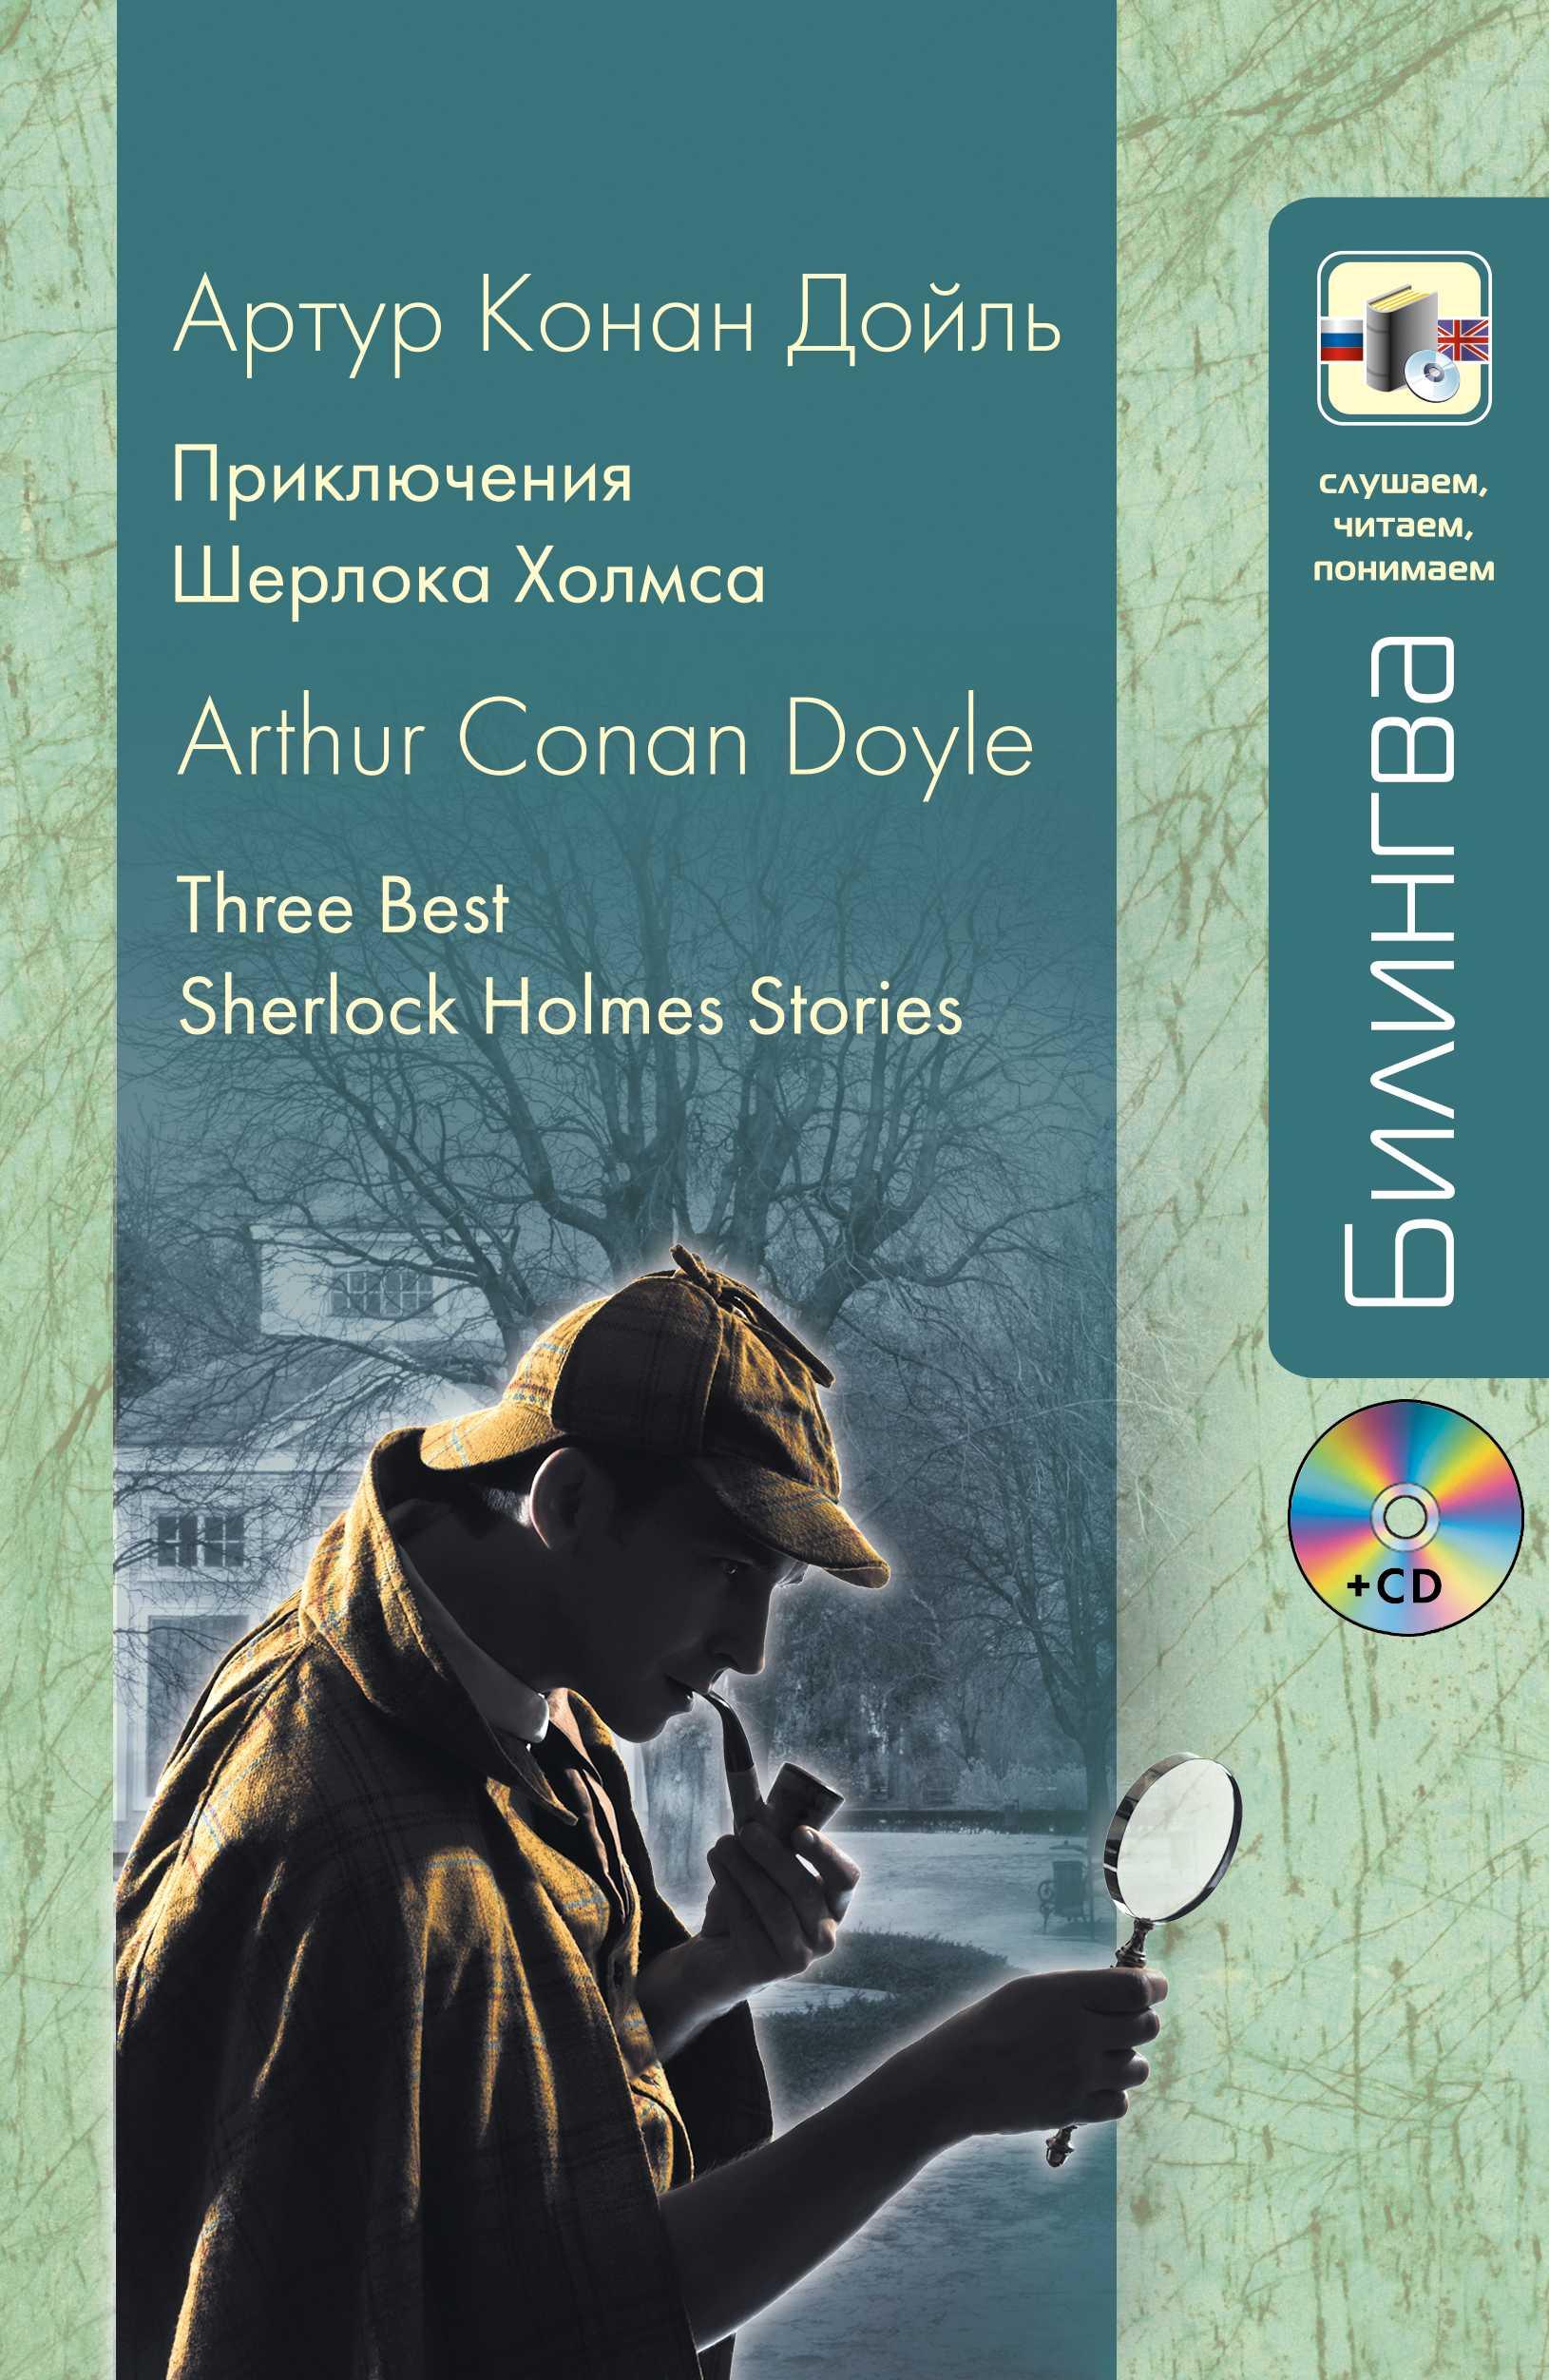 ПРИКЛЮЧЕНИЯ ШЕРЛОКА ХОЛМСА. 3 BEST SHERLOCK HOLMES STORIES (+CD)